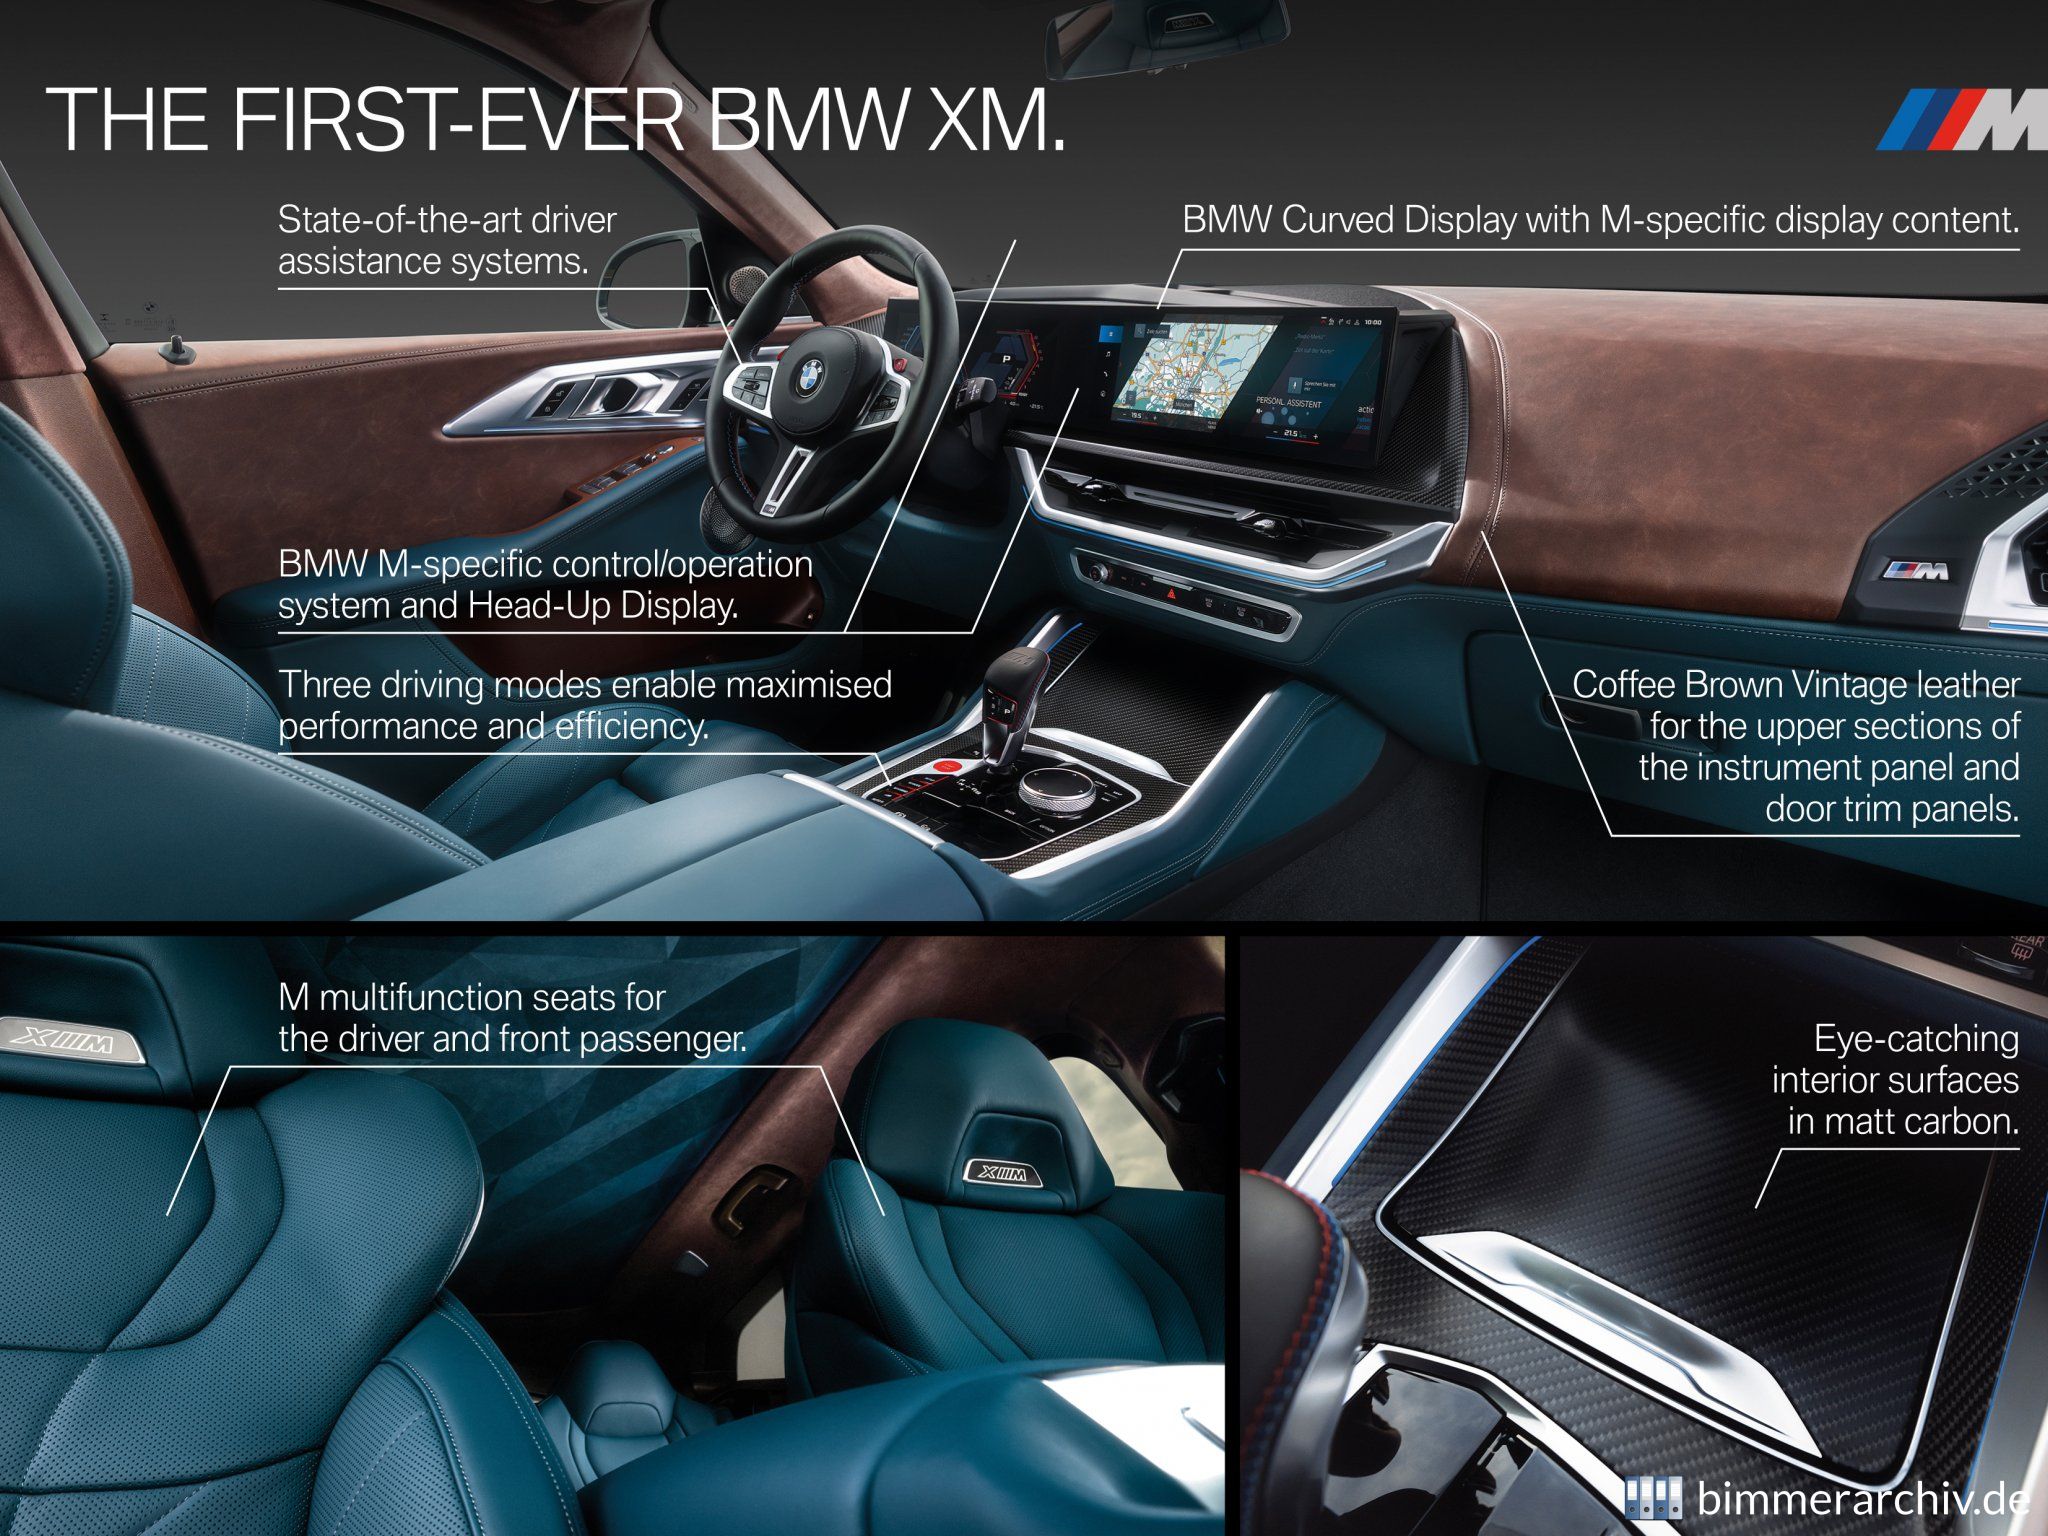 BMW XM - Highlights